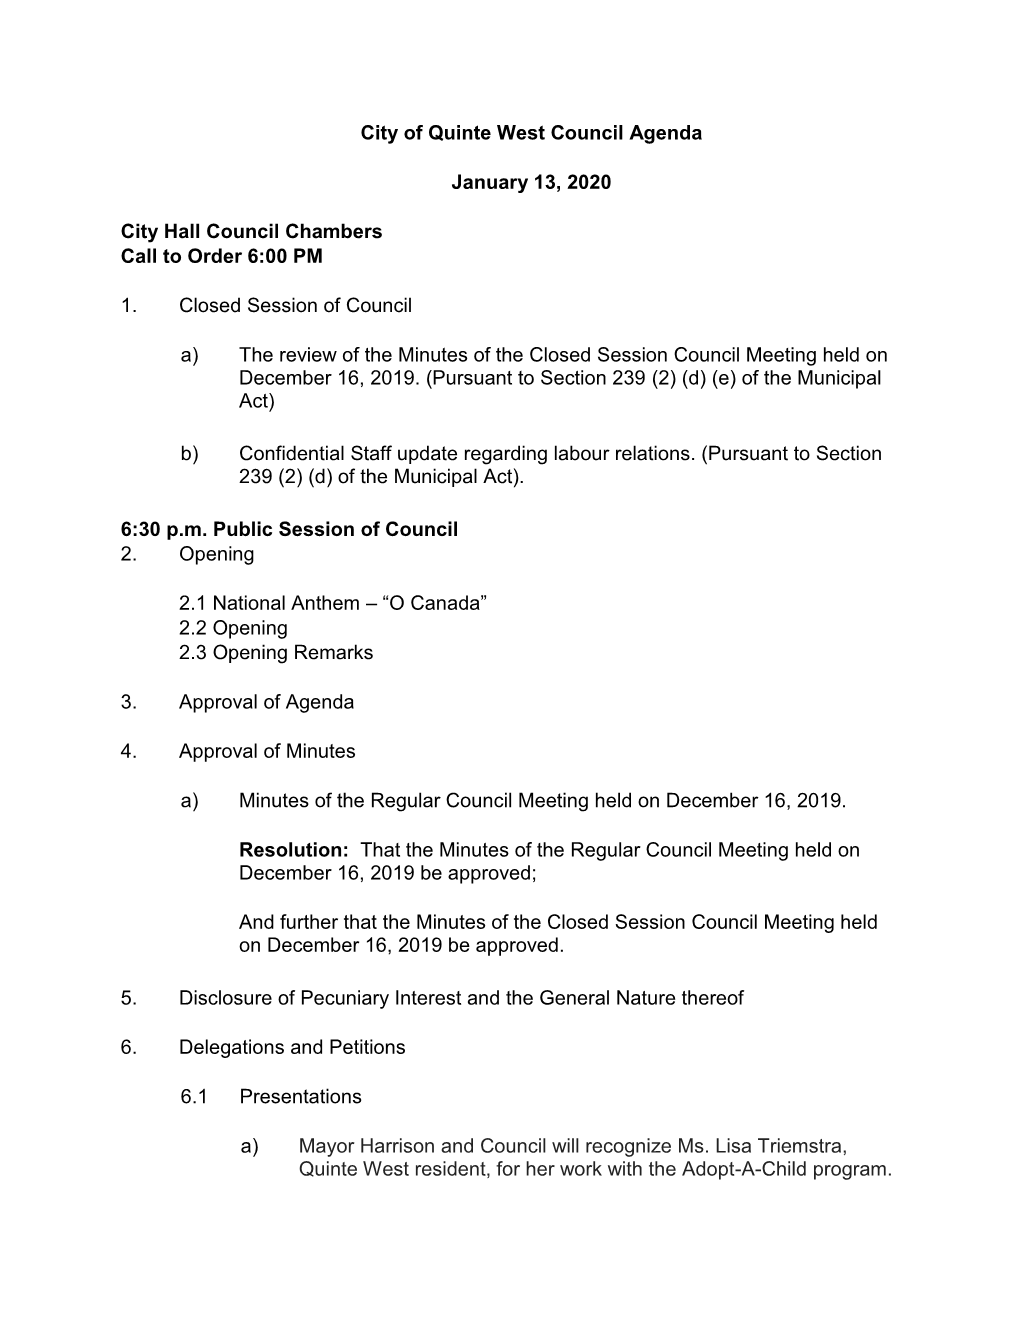 City of Quinte West Council Agenda January 13, 2020 City Hall Council